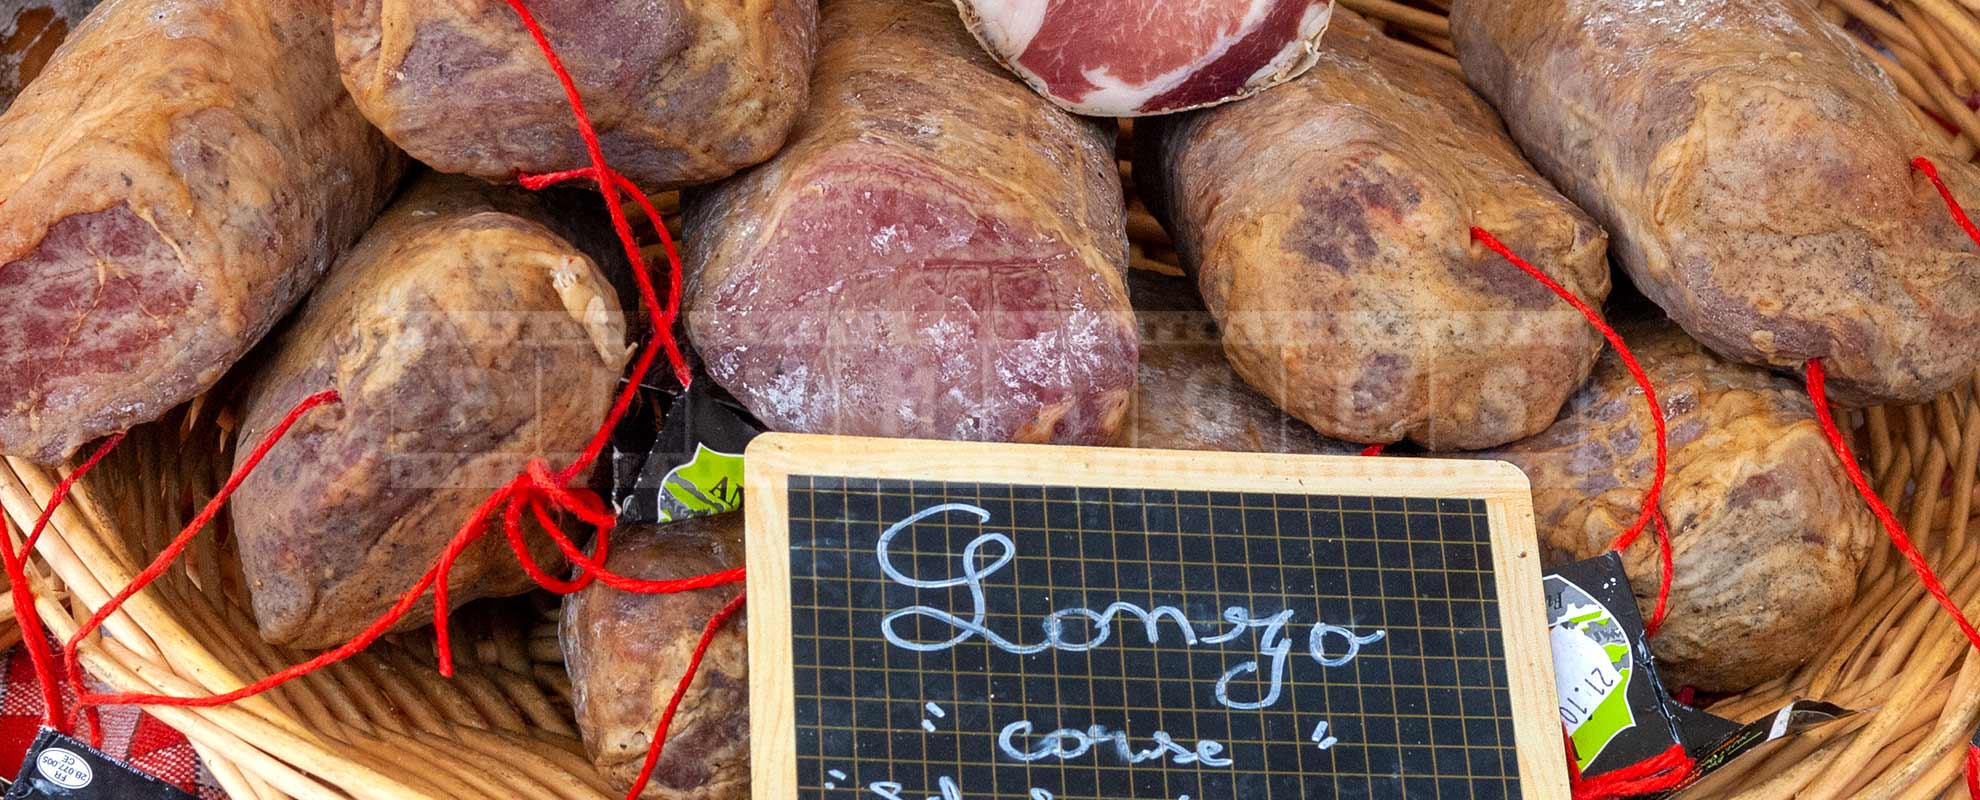 Corsican style pork known as Lonzo Corse